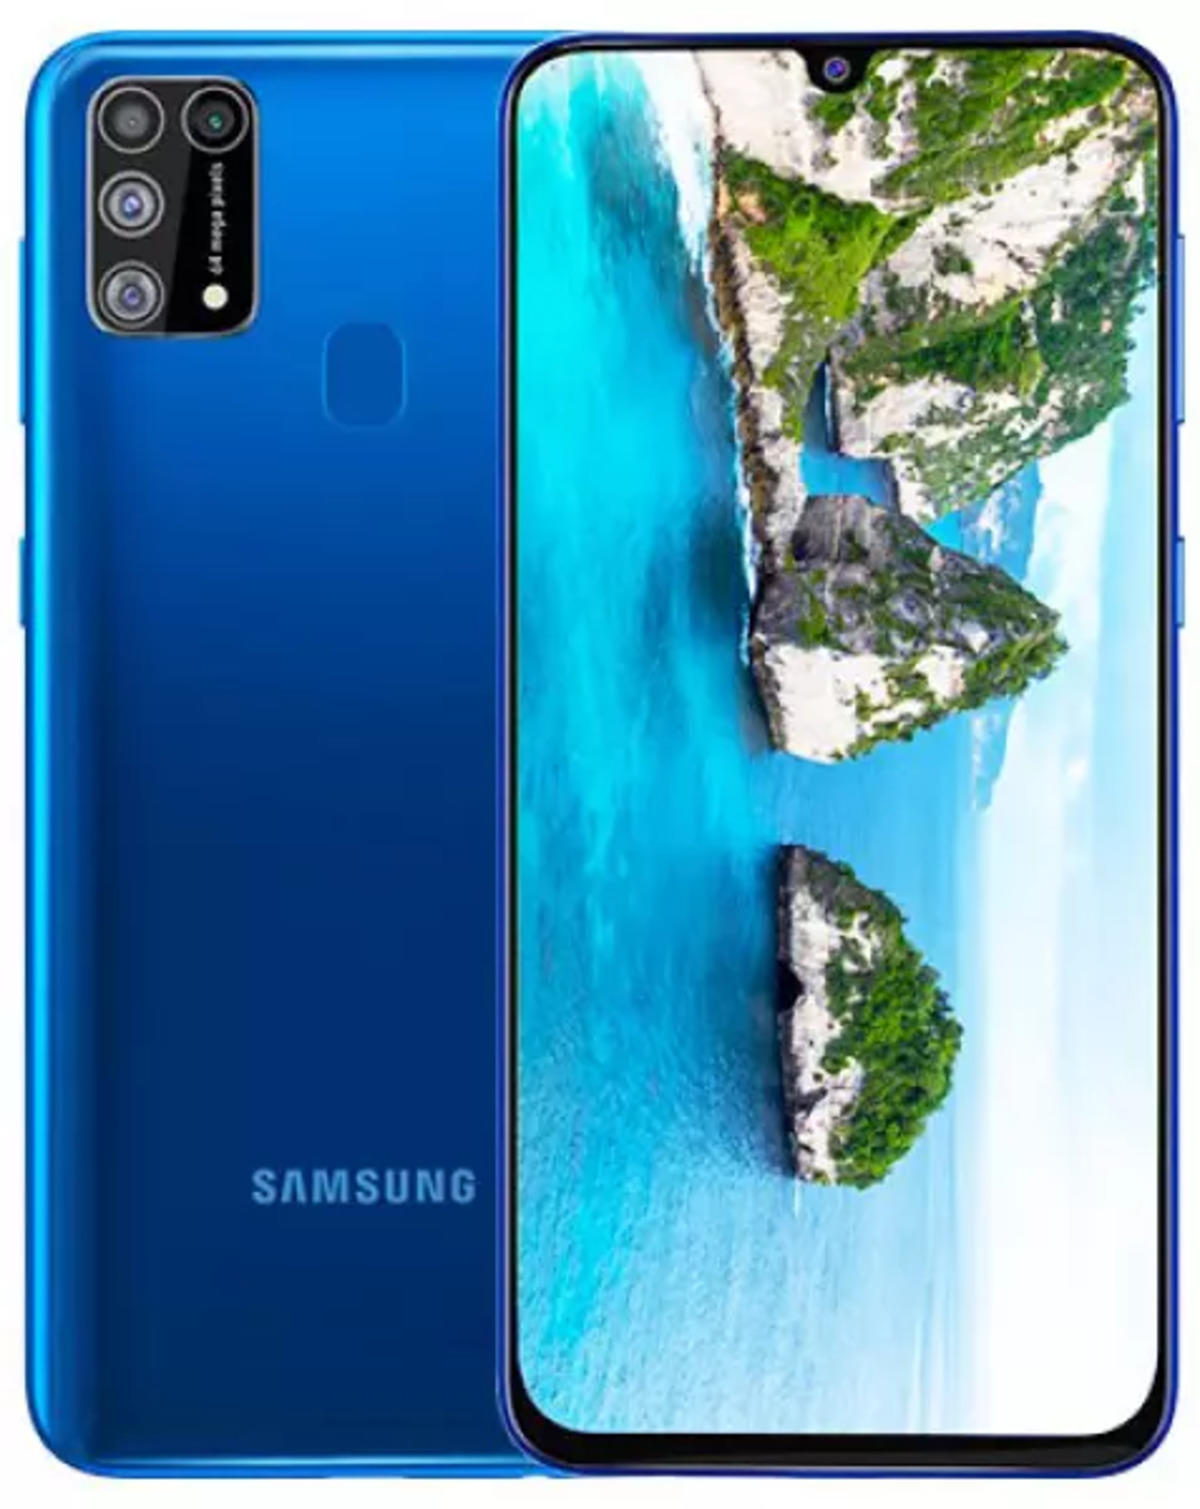 Samsung телефона 31. Самсунг галакси m31. Samsung Galaxy m31 Samsung. Samsung m31 128gb. Самсунг галакси м31 128гб.